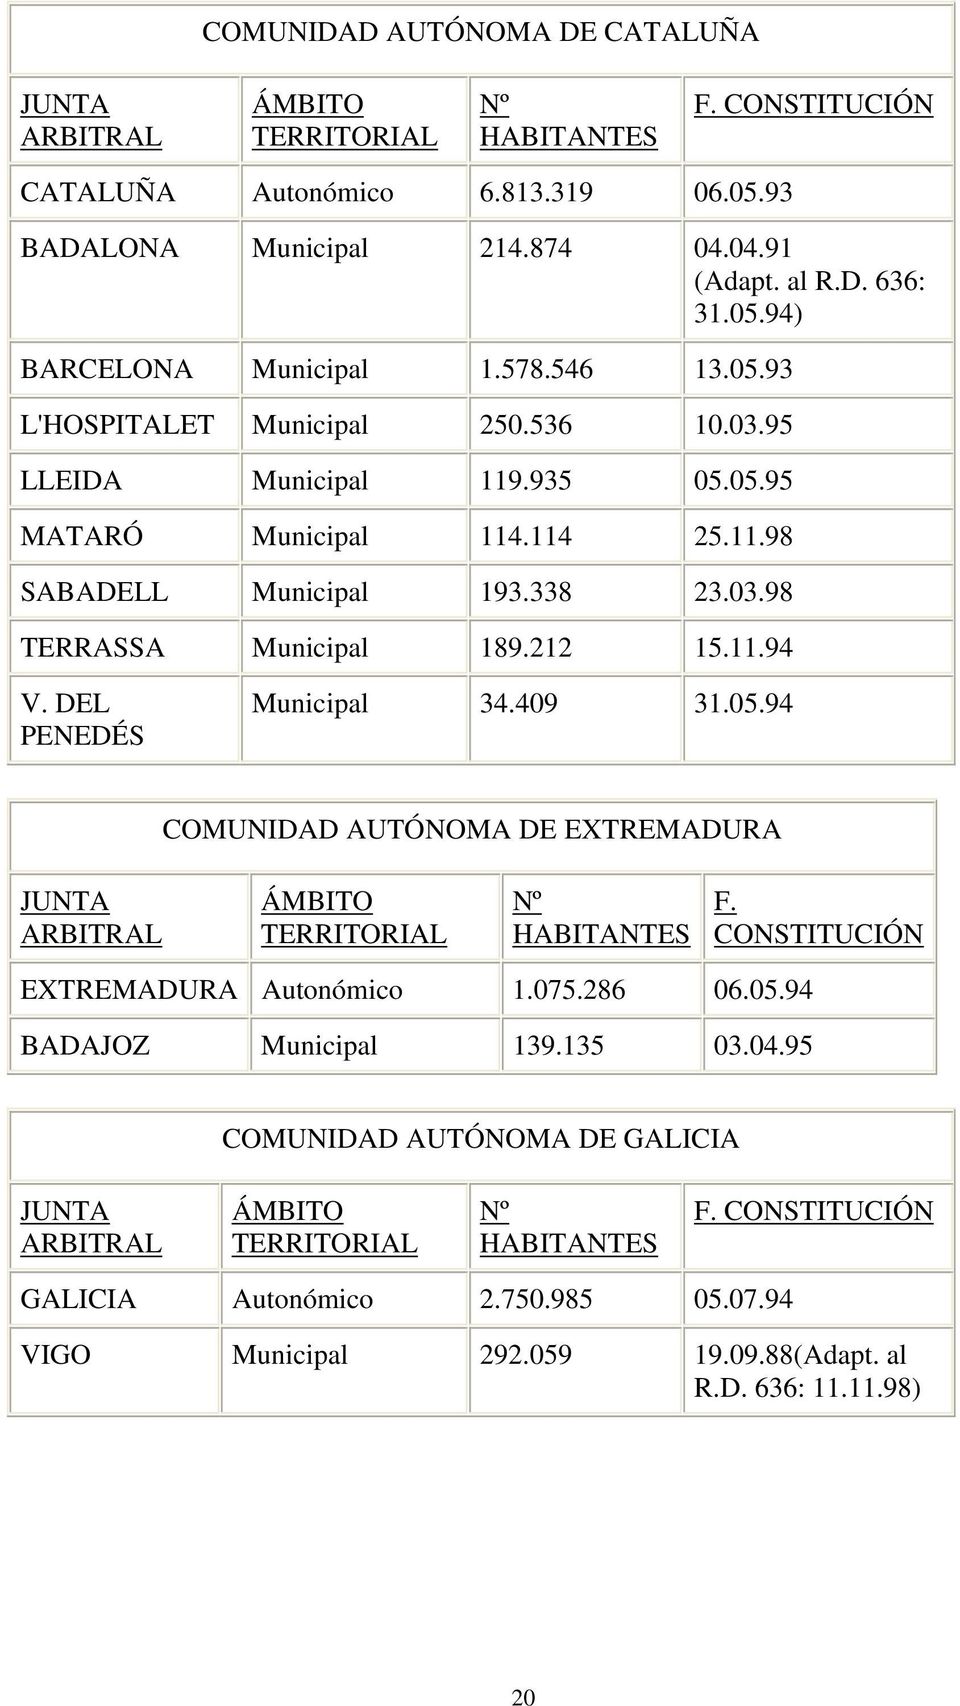 DEL PENEDÉS Municipal 34.409 31.05.94 COMUNIDAD AUTÓNOMA DE EXTREMADURA JUNTA ARBITRAL ÁMBITO TERRITORIAL Nº HABITANTES F. CONSTITUCIÓN EXTREMADURA Autonómico 1.075.286 06.05.94 BADAJOZ Municipal 139.